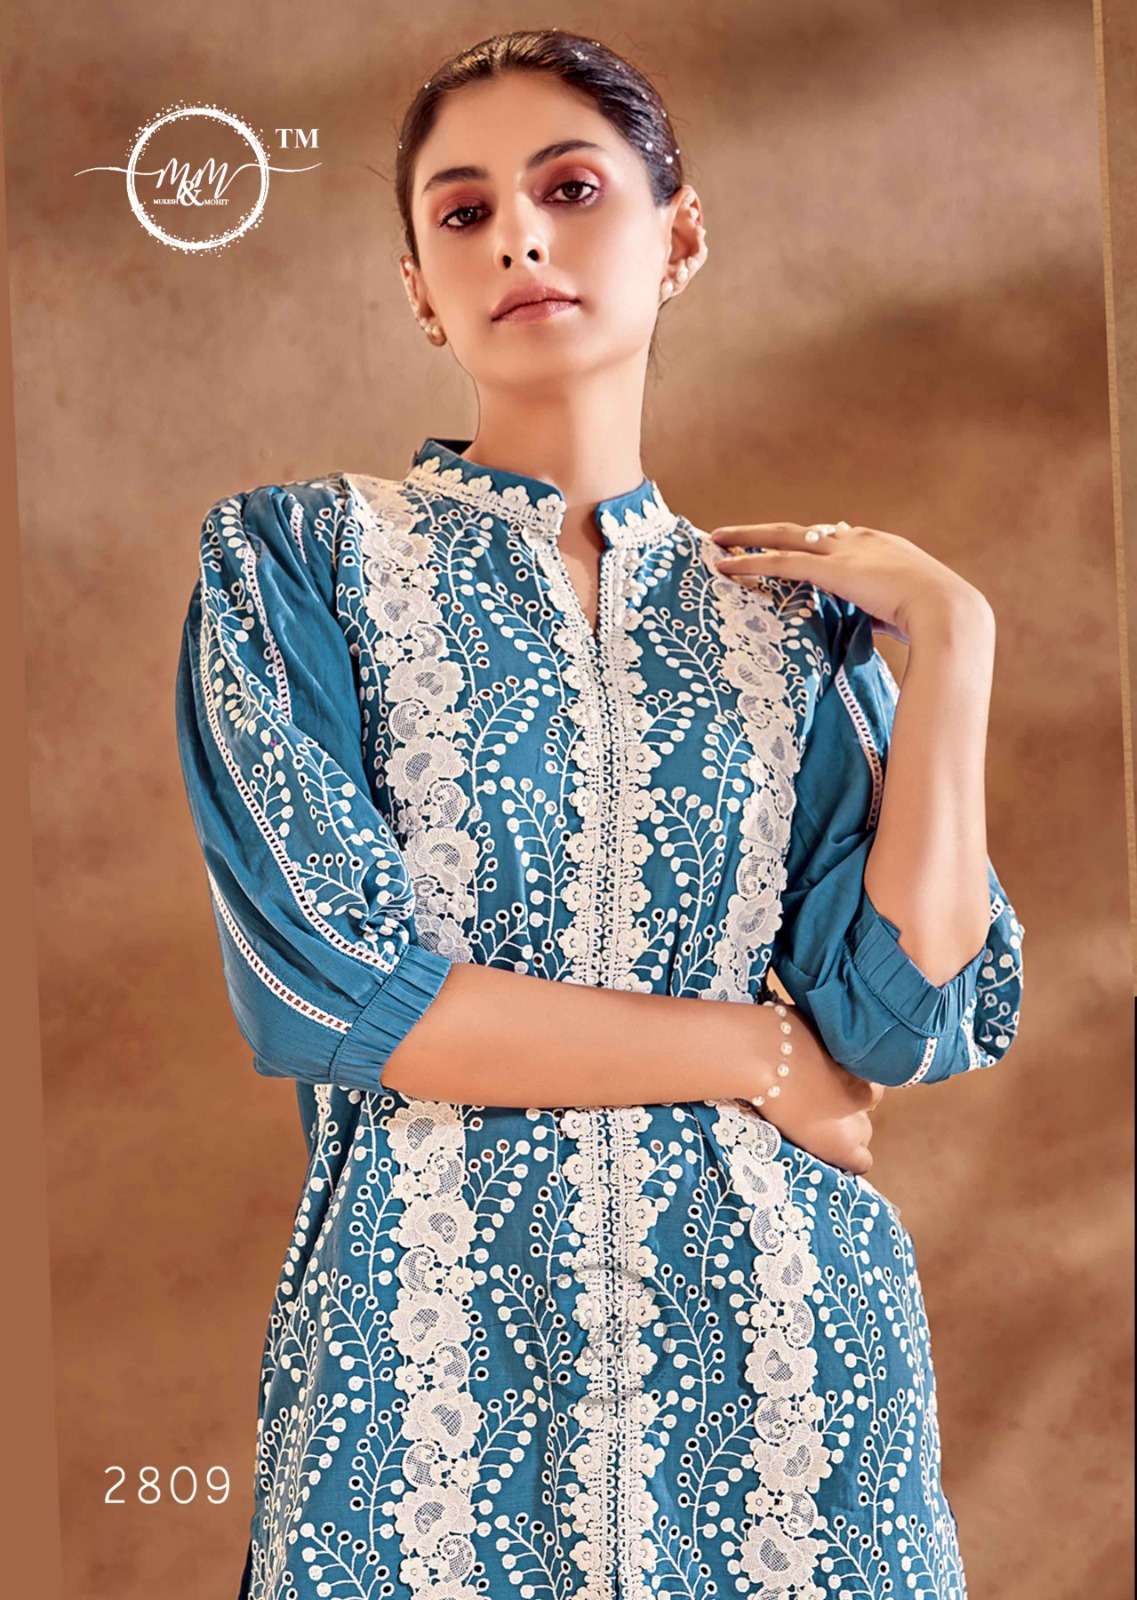 m&m 2809 series afghani style dress catalogue latest design 2023